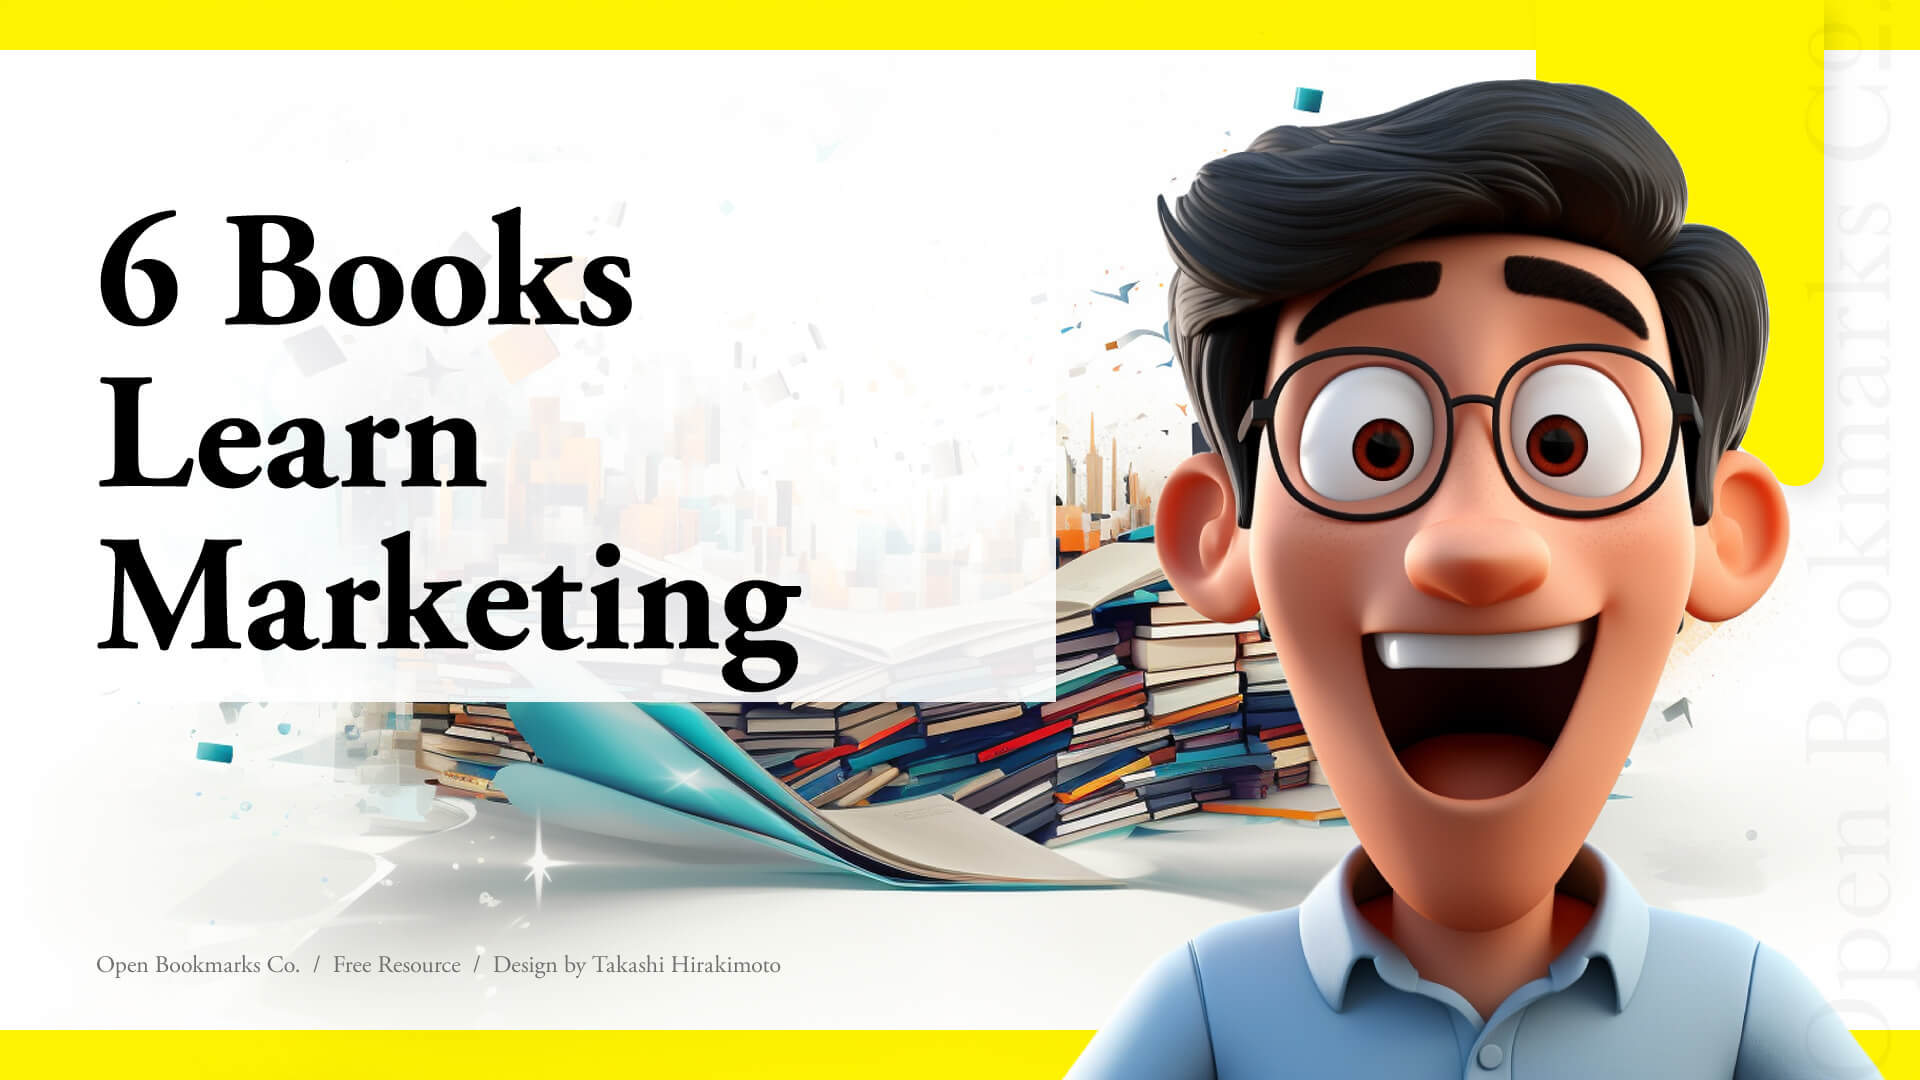 Open Bookmarks Co. Free Resource Branding Web Design SEO Marketing